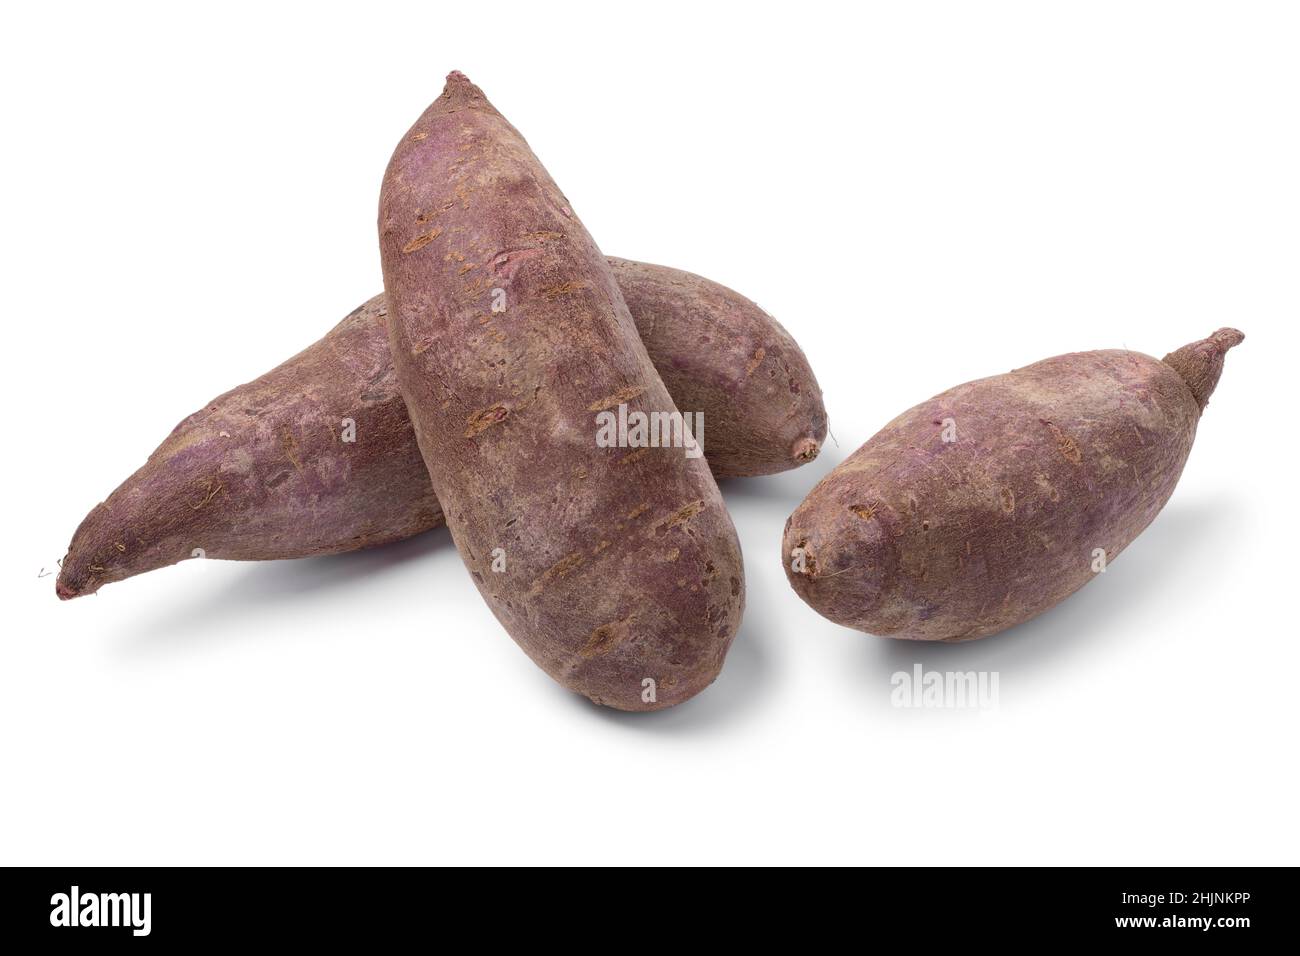 Group of whole fresh purple sweet potatoes isolated on white background Stock Photo